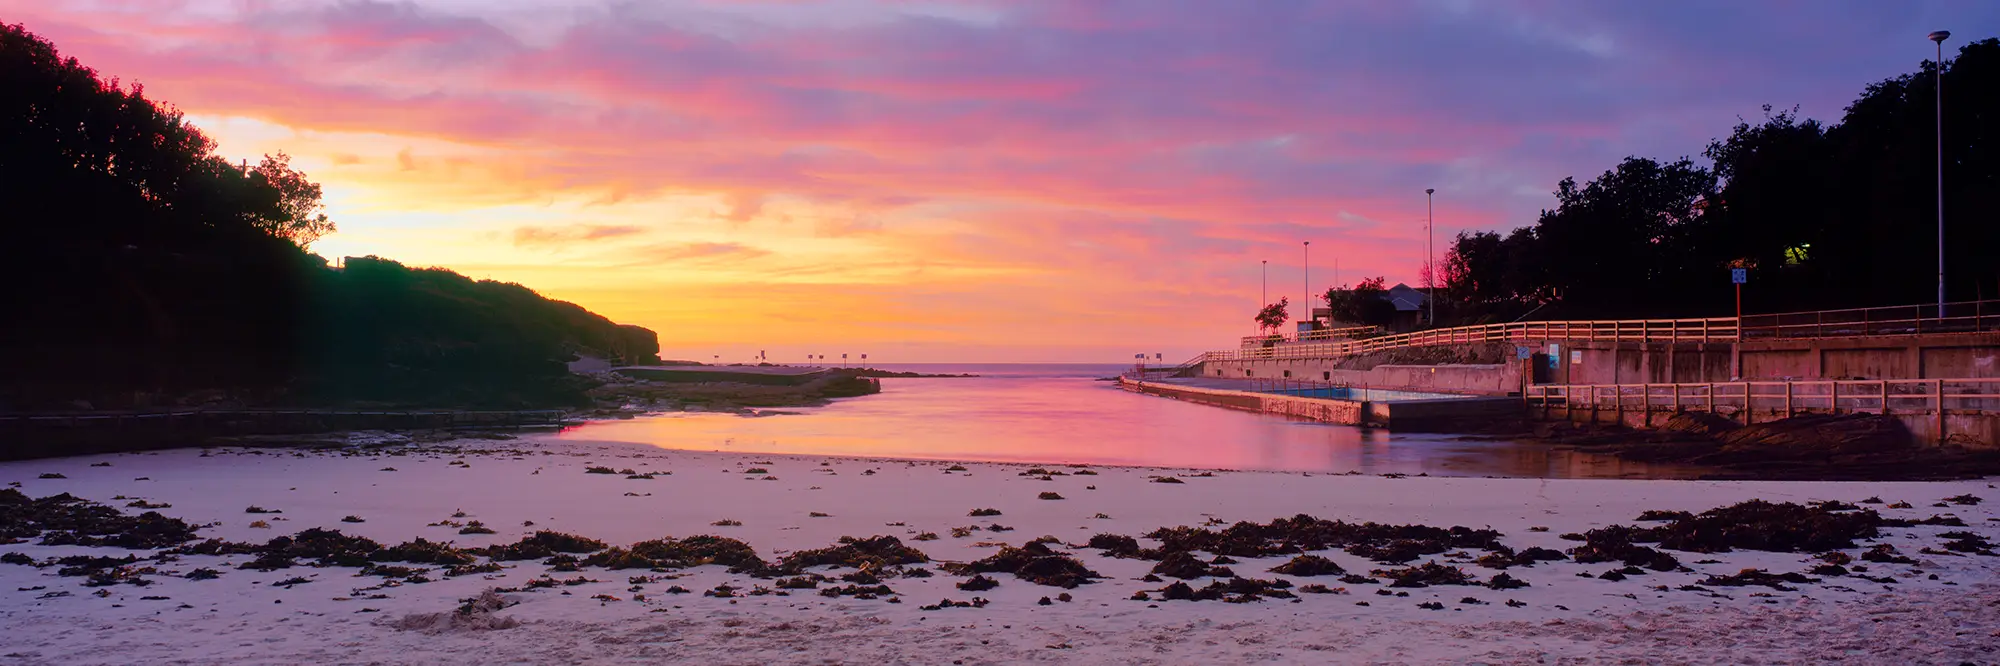 Clovelly Beach Panoramic Sunrise Landscape Canvas Artwork Photos